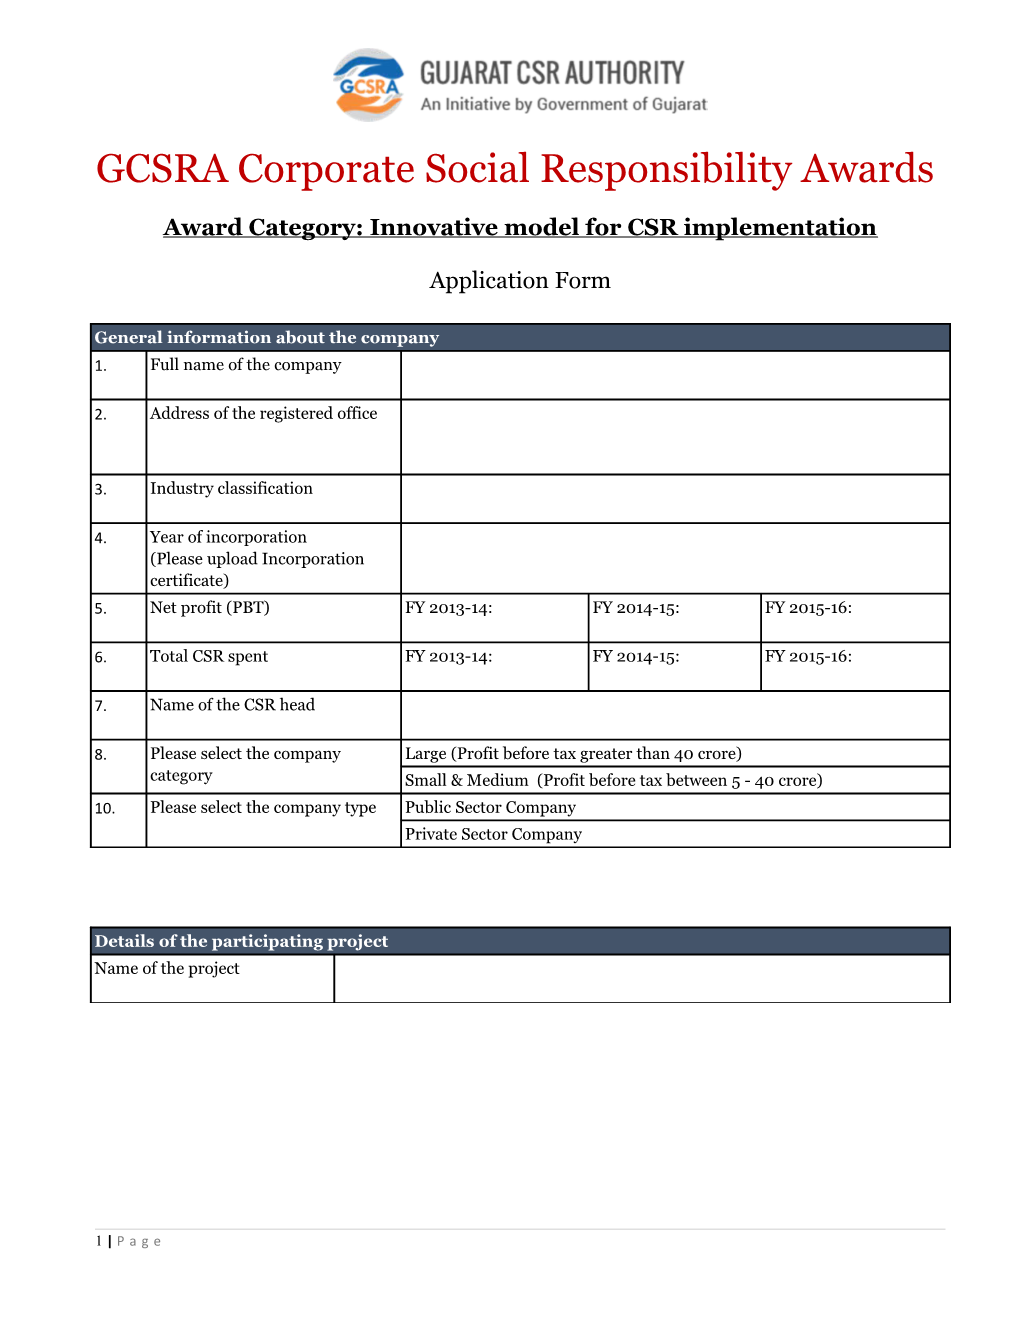 Award Category: Innovative Model for CSR Implementation